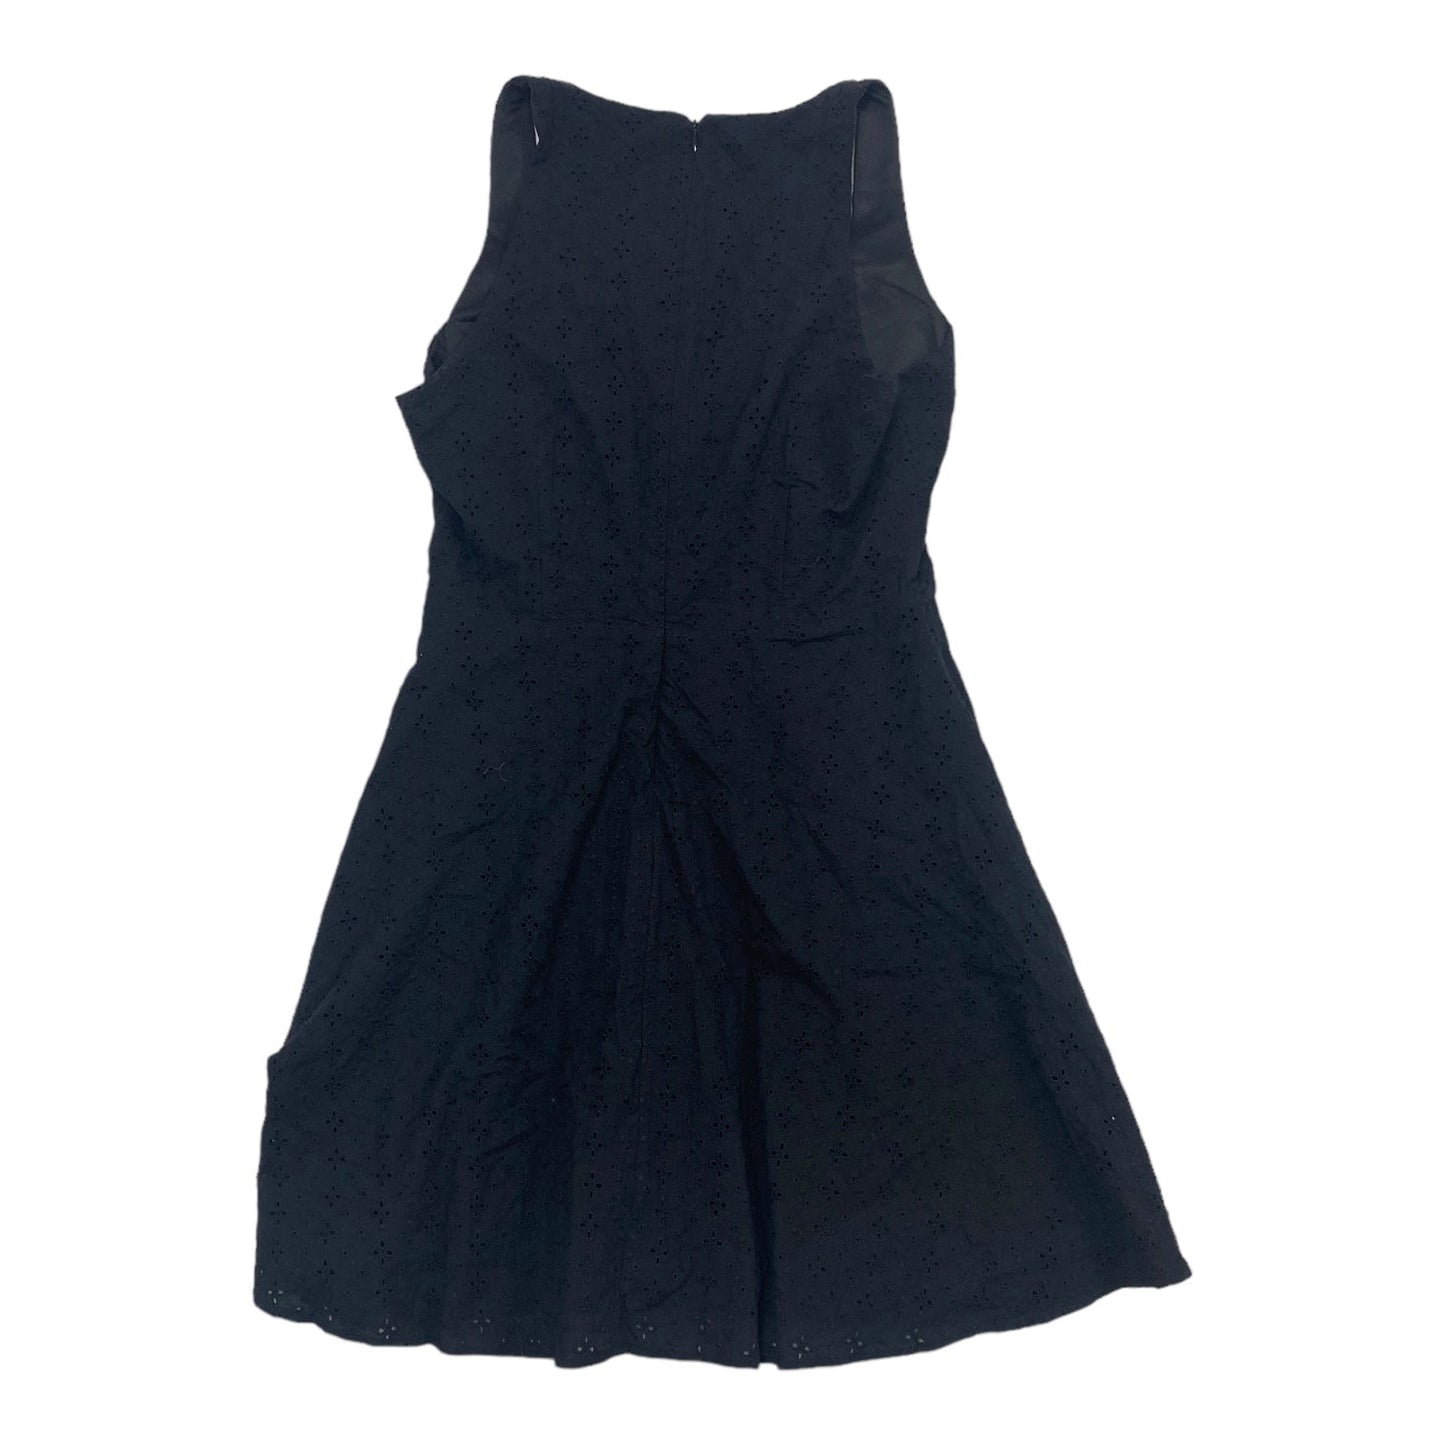 Black Dress Casual Midi Cmc, Size Xl